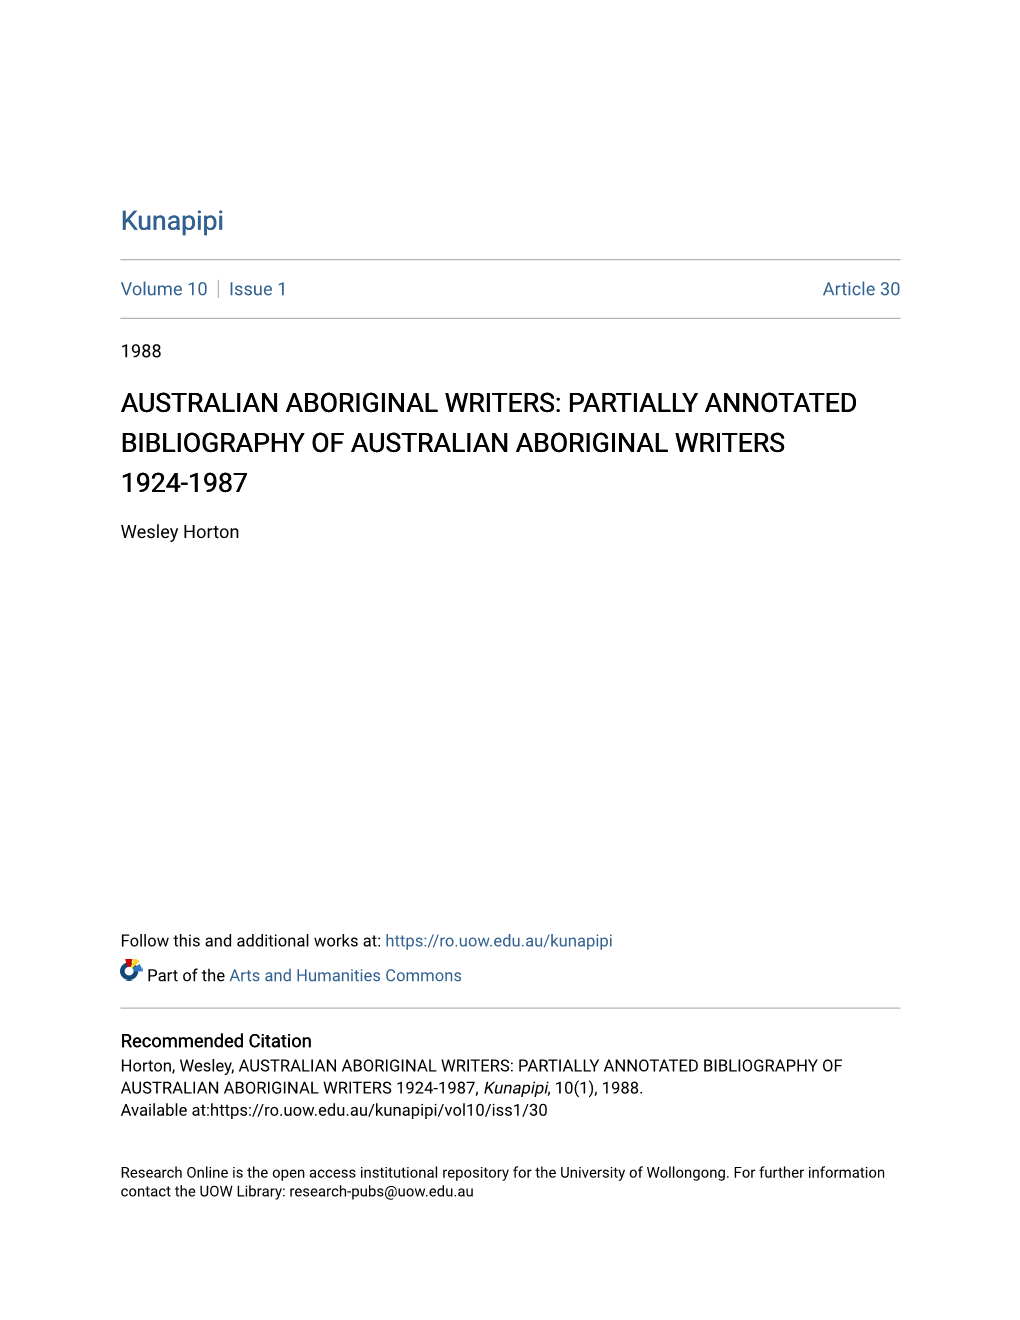 Australian Aboriginal Writers: Partially Annotated Bibliography of Australian Aboriginal Writers 1924-1987